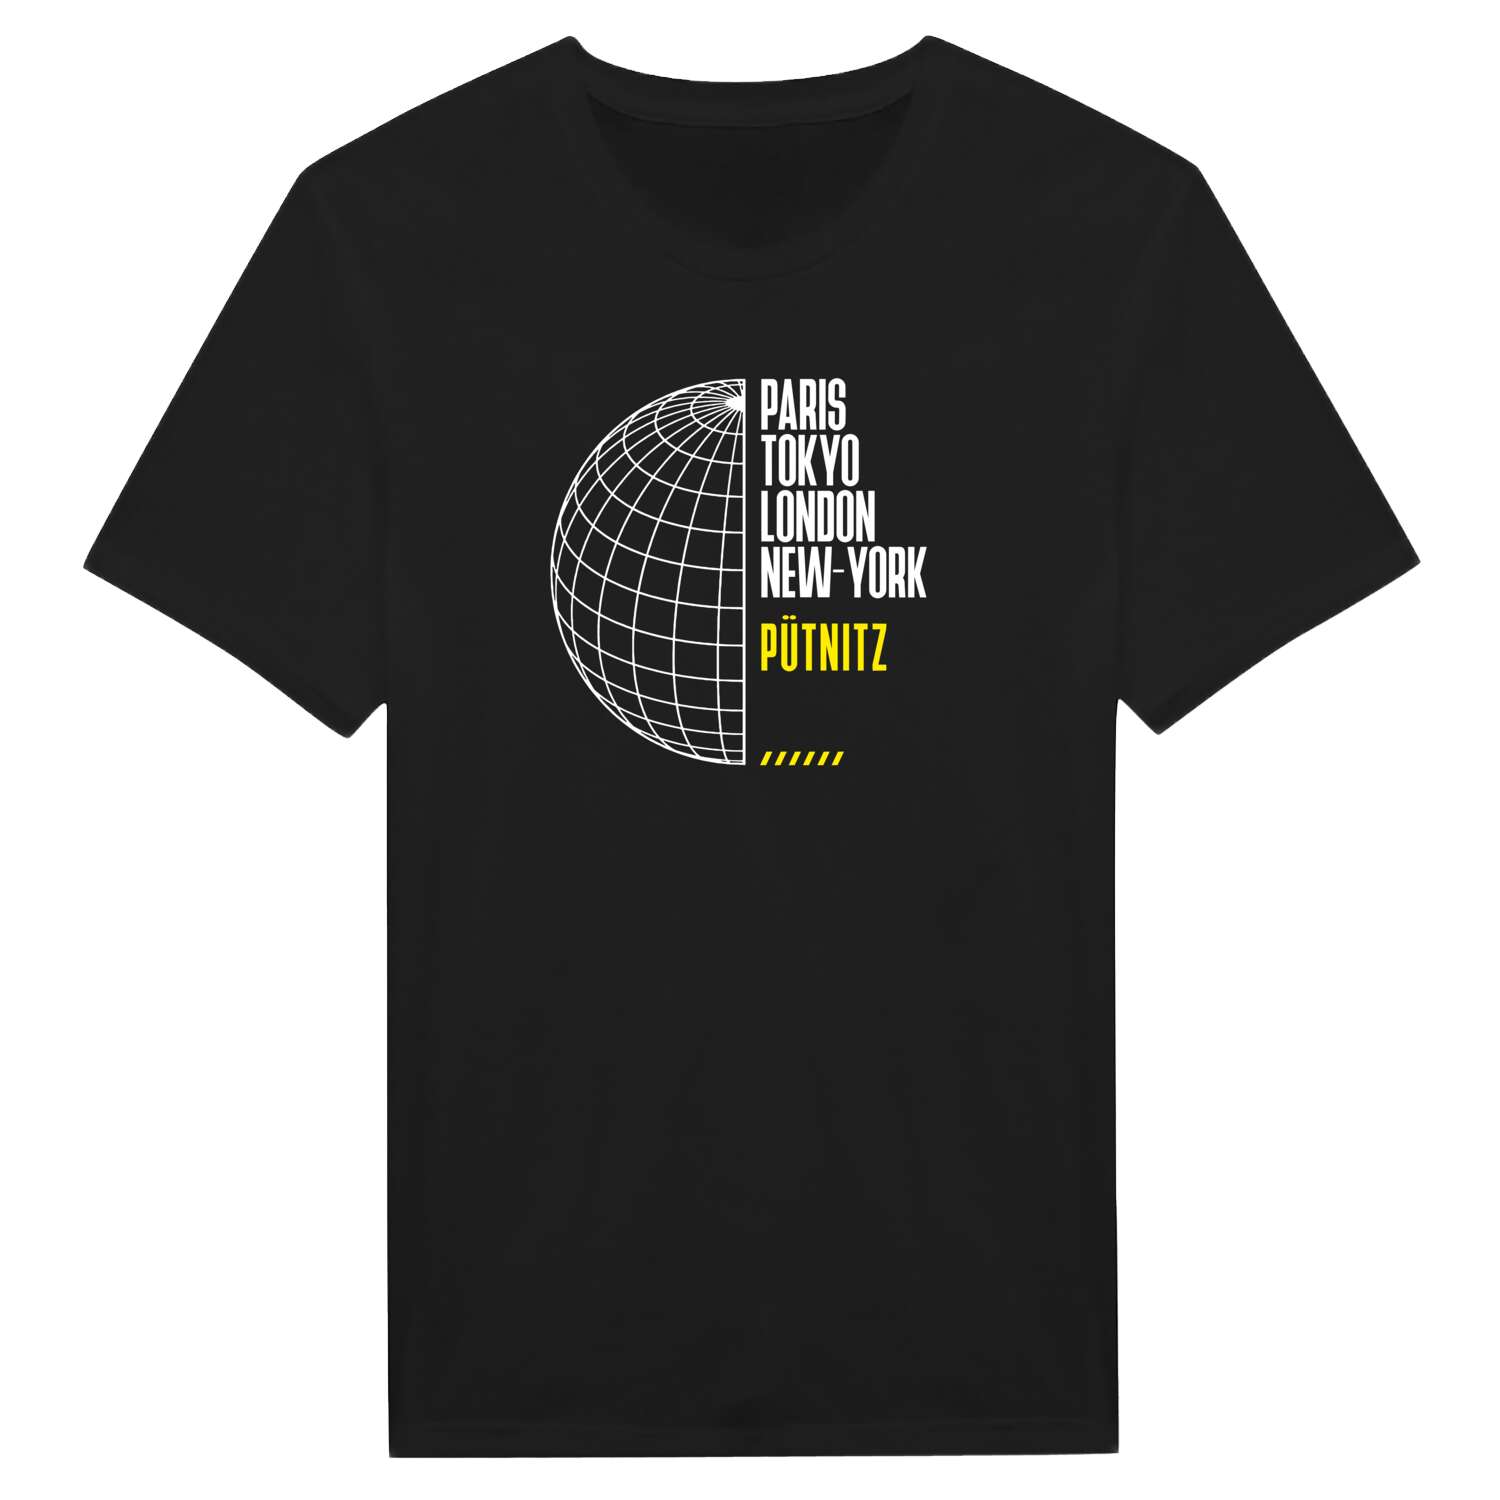 Pütnitz T-Shirt »Paris Tokyo London«